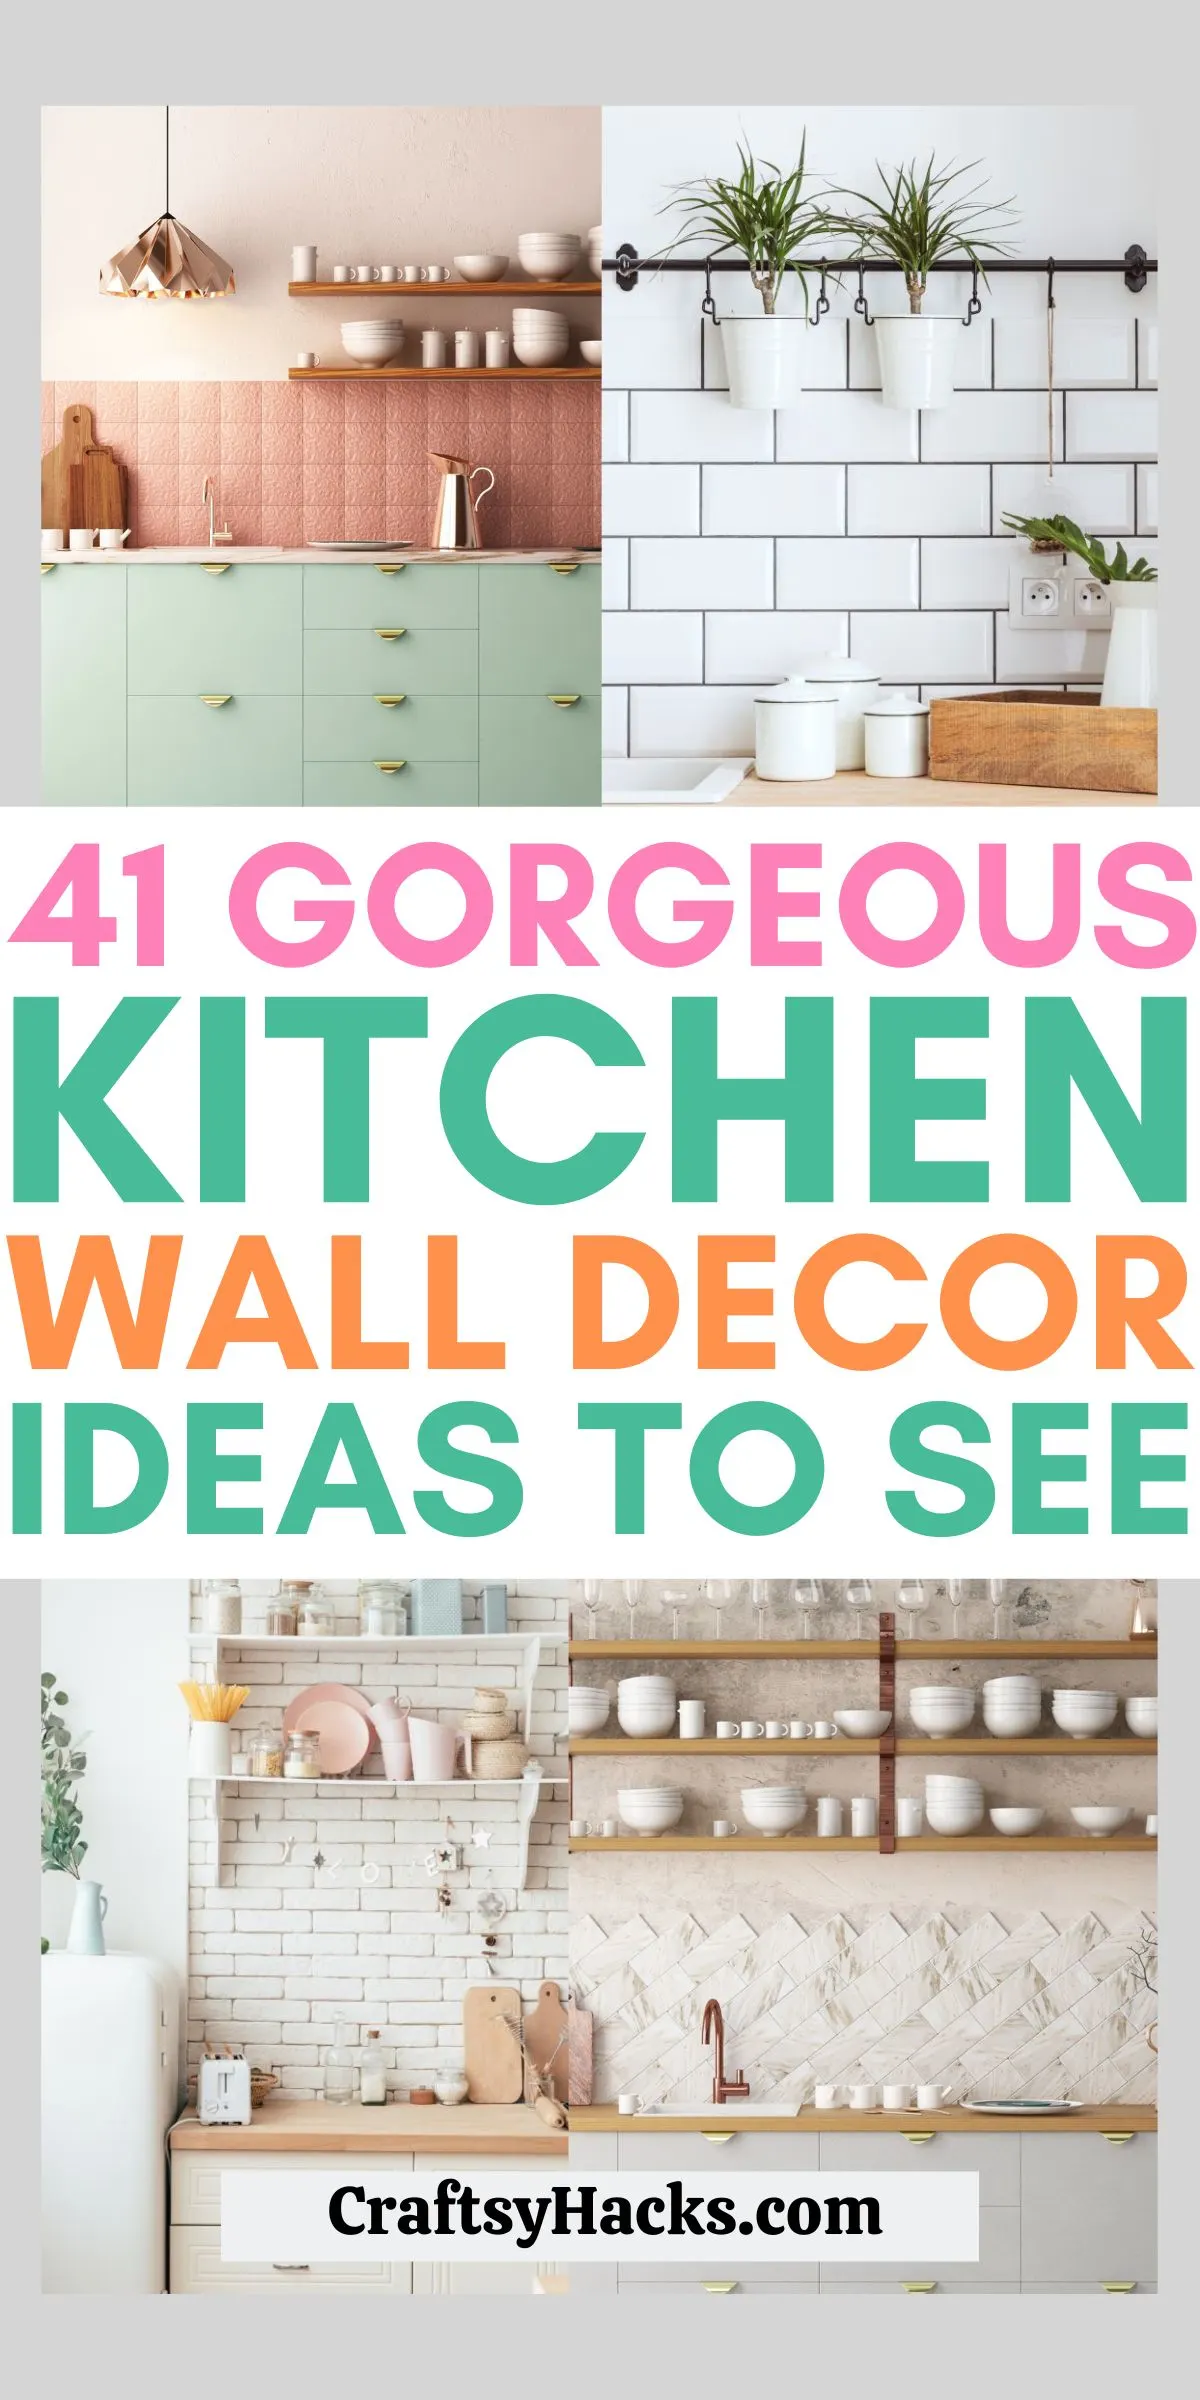 18 Gorgeous Kitchen Wall Decor Ideas   Craftsy Hacks